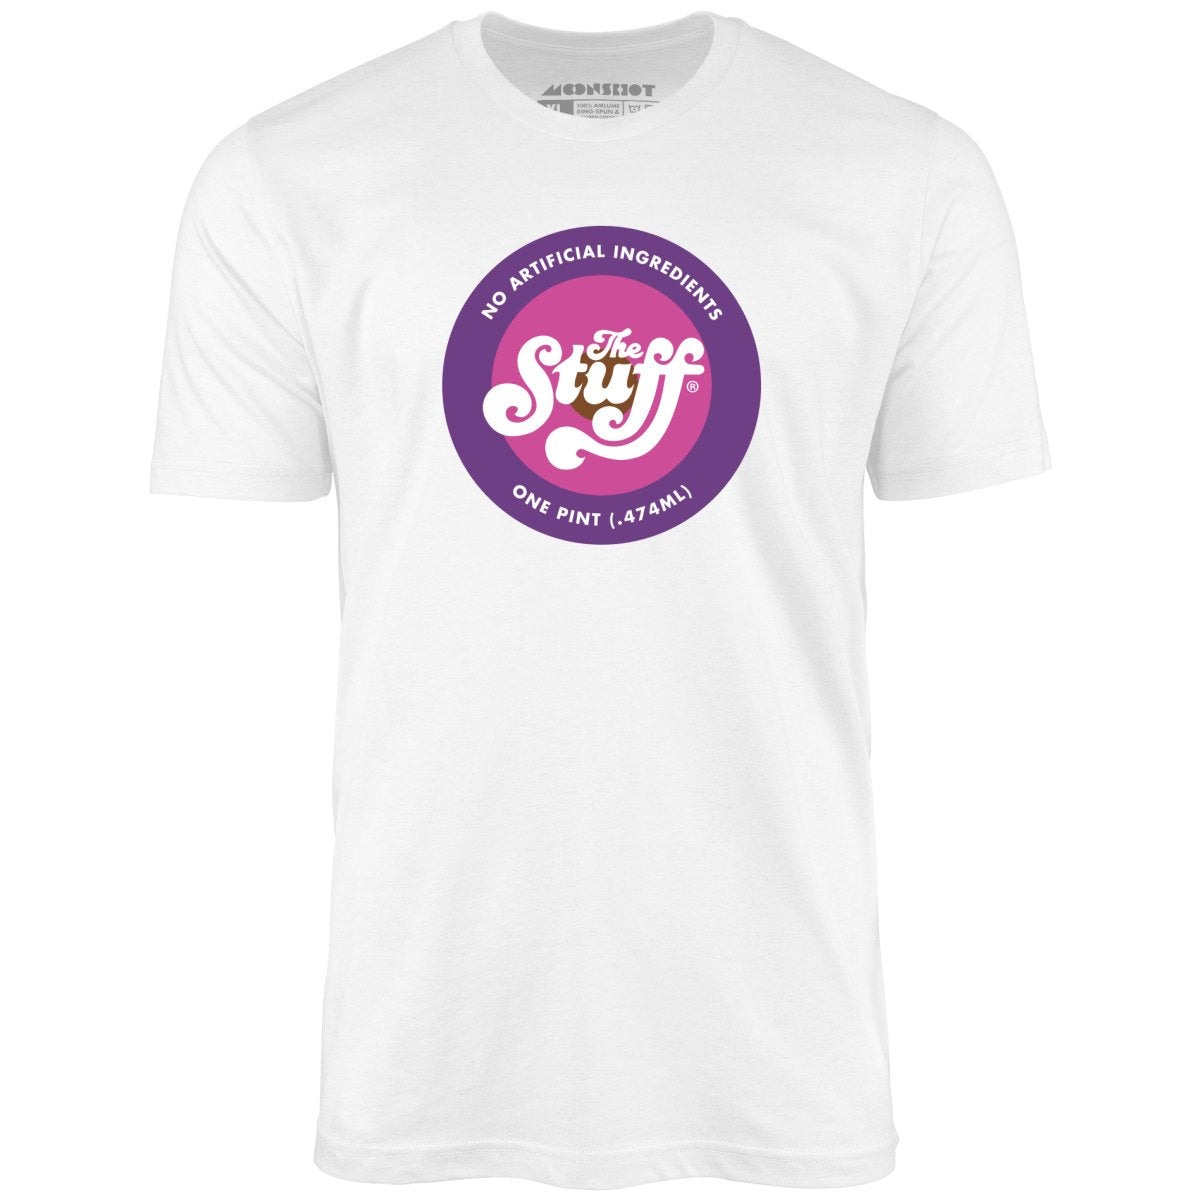 The Stuff - Unisex T-Shirt